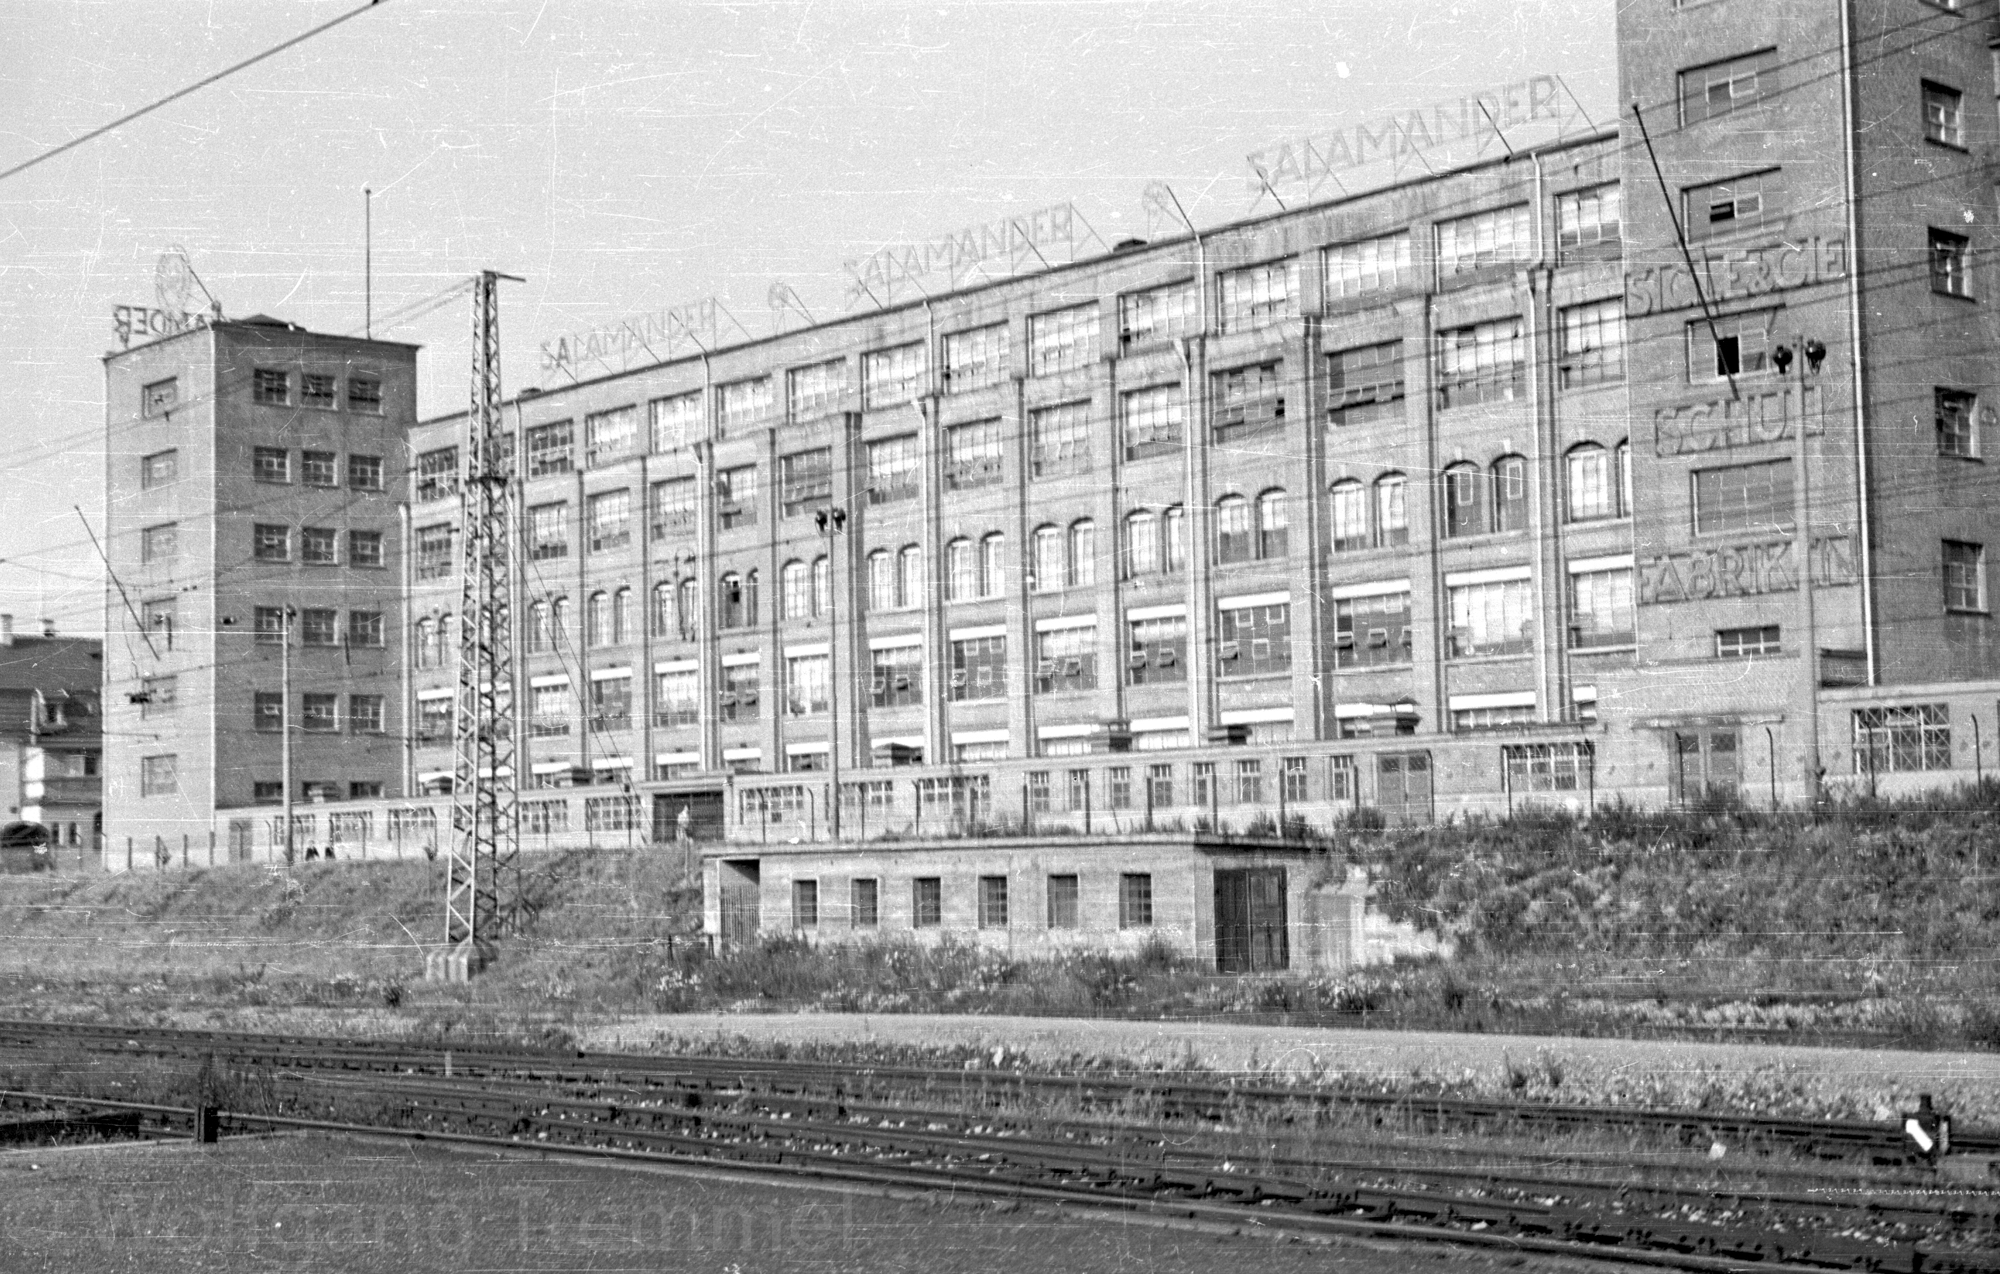 1951: Salamander Factory Building